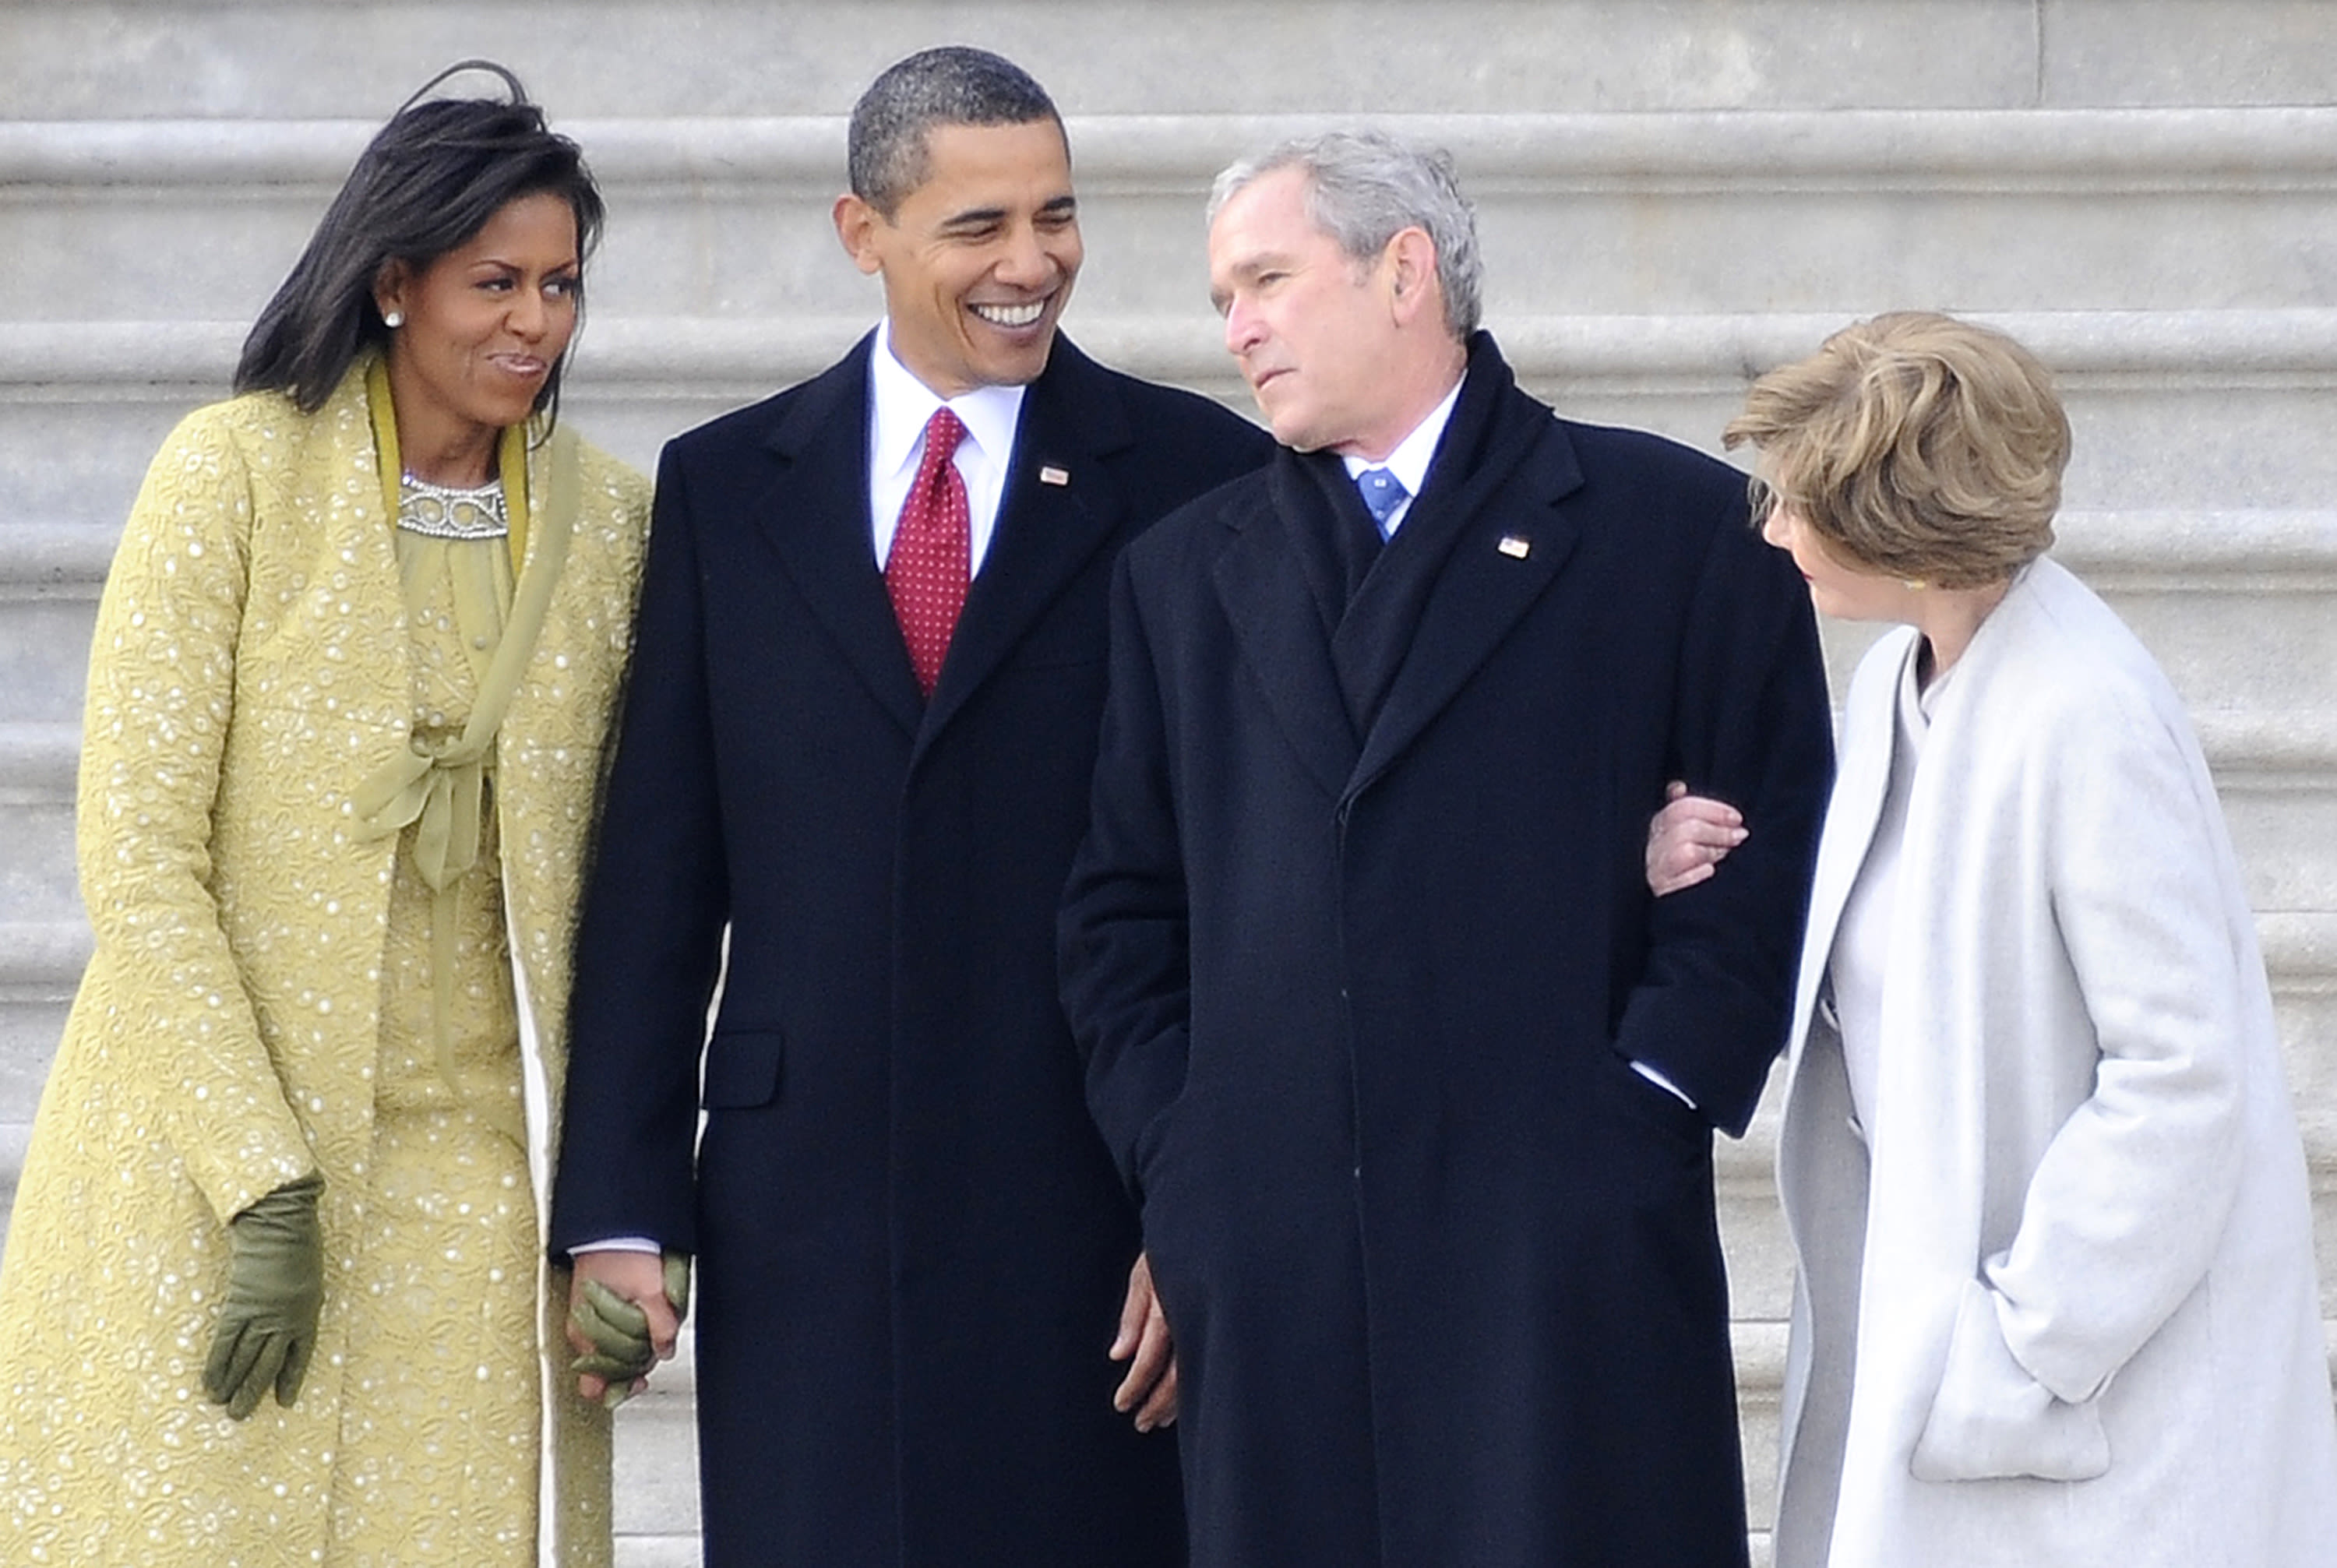 Obama and Bush to mark America's 250th anniversary